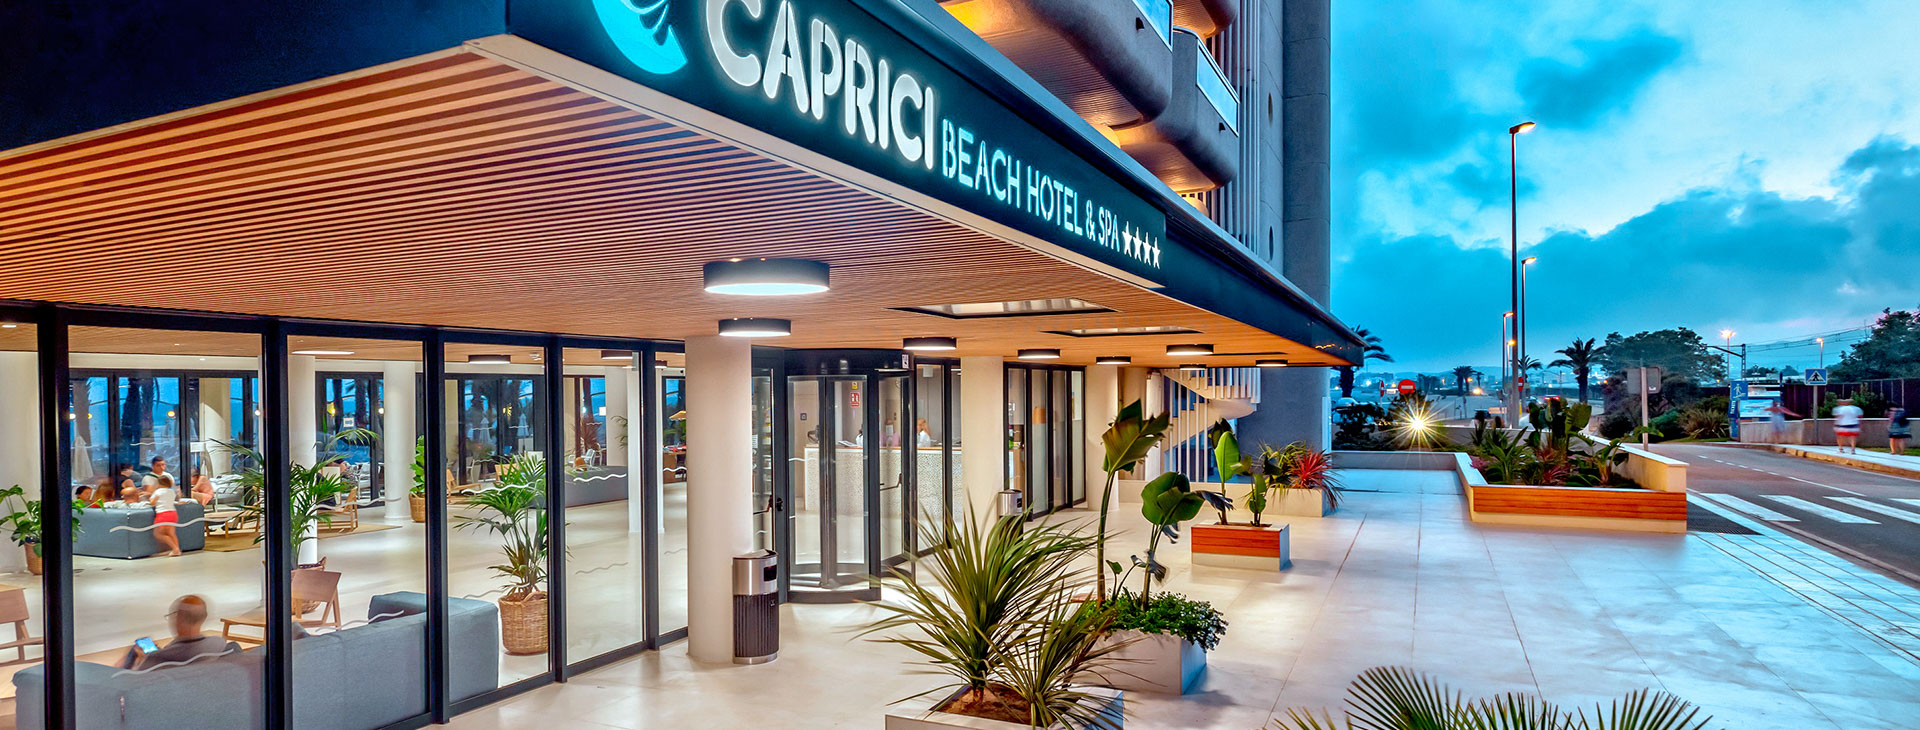 Caprici Beach Hotel & Spa Obrázek15